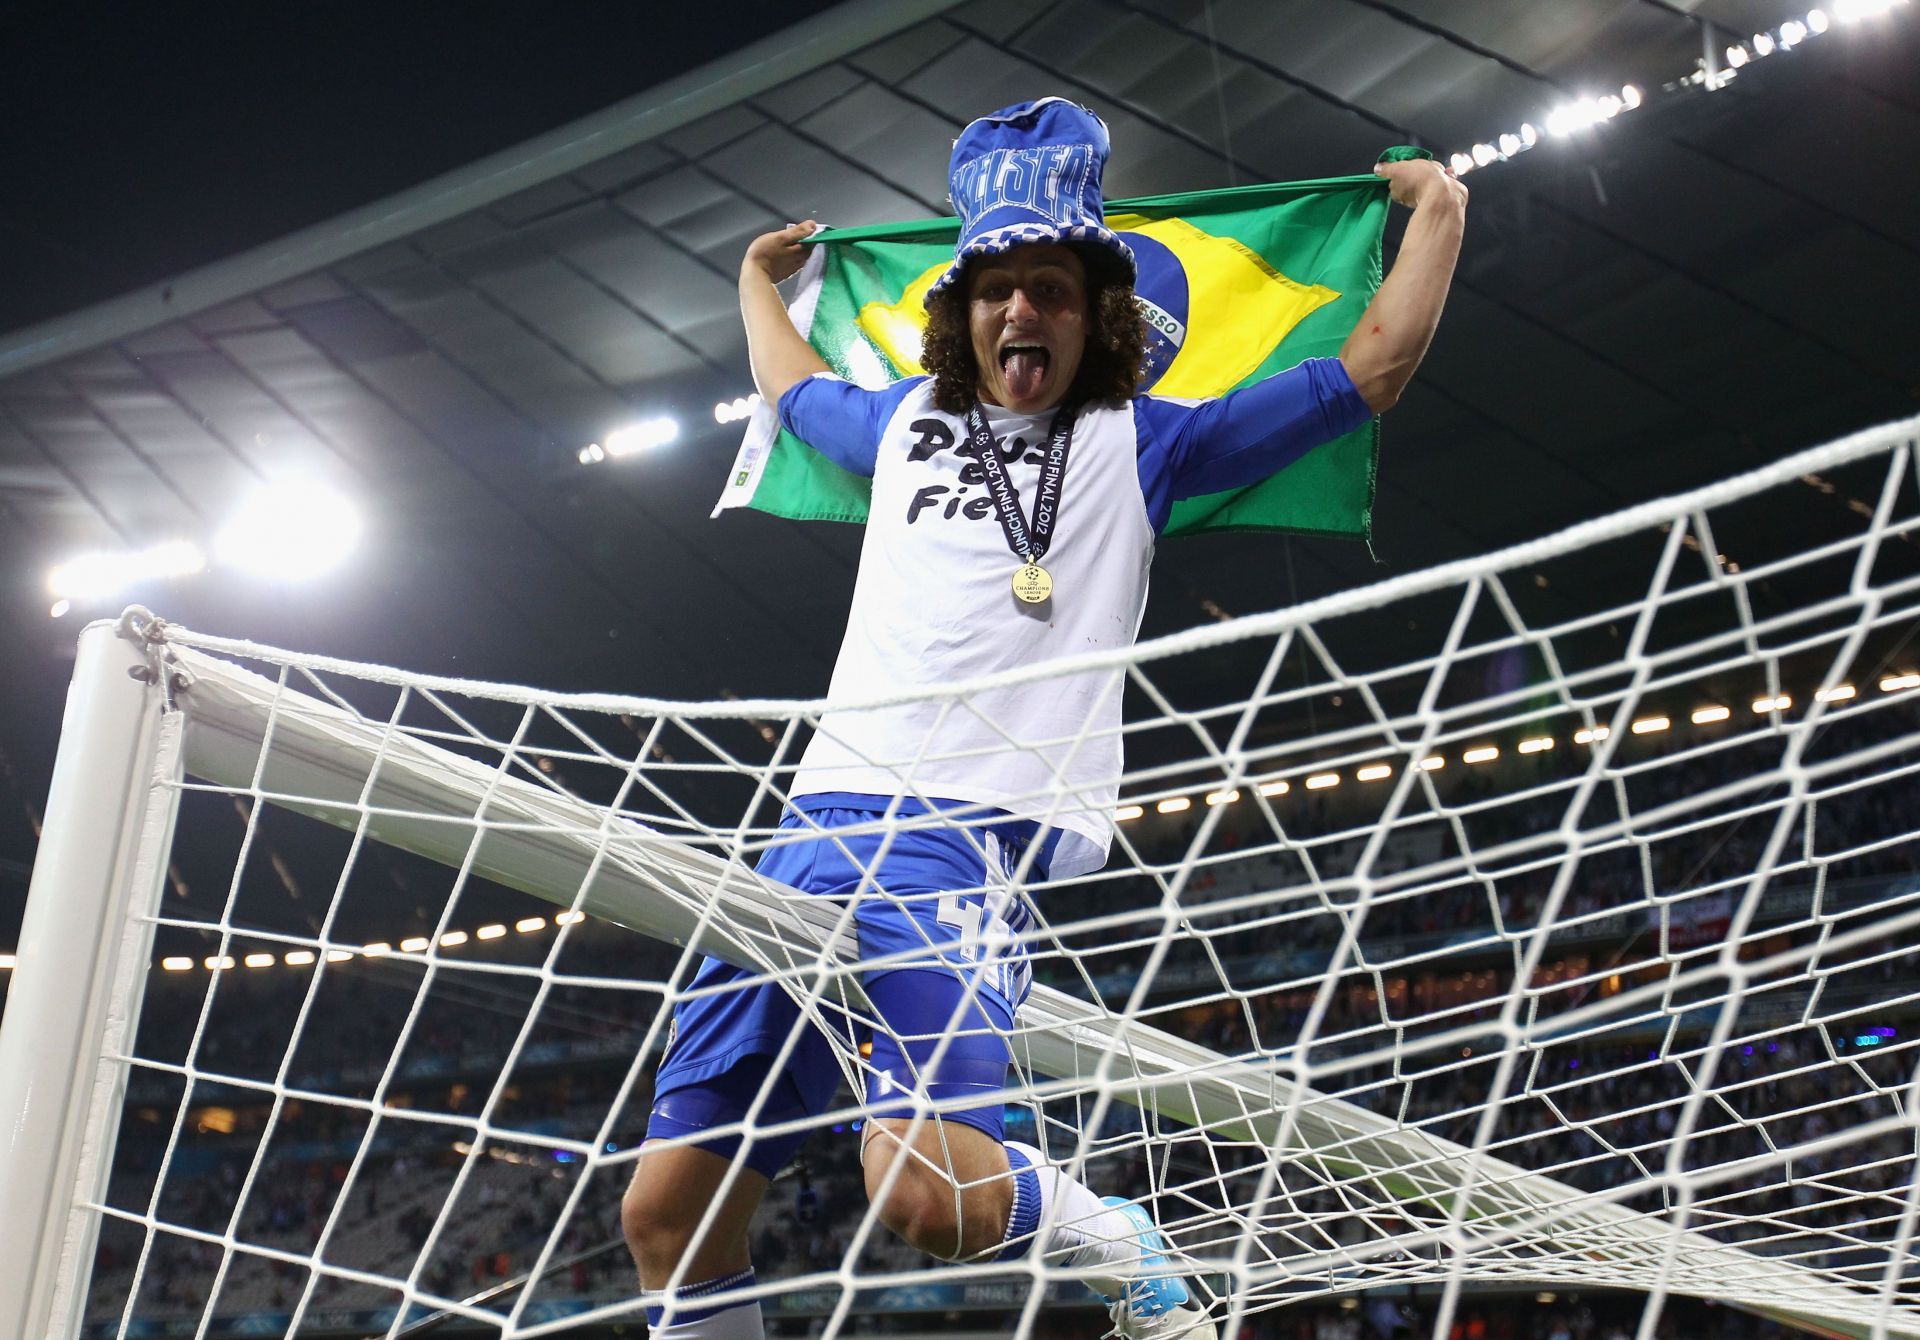 David Luiz celebrates after winning the 2012 UEFA Champions League Final